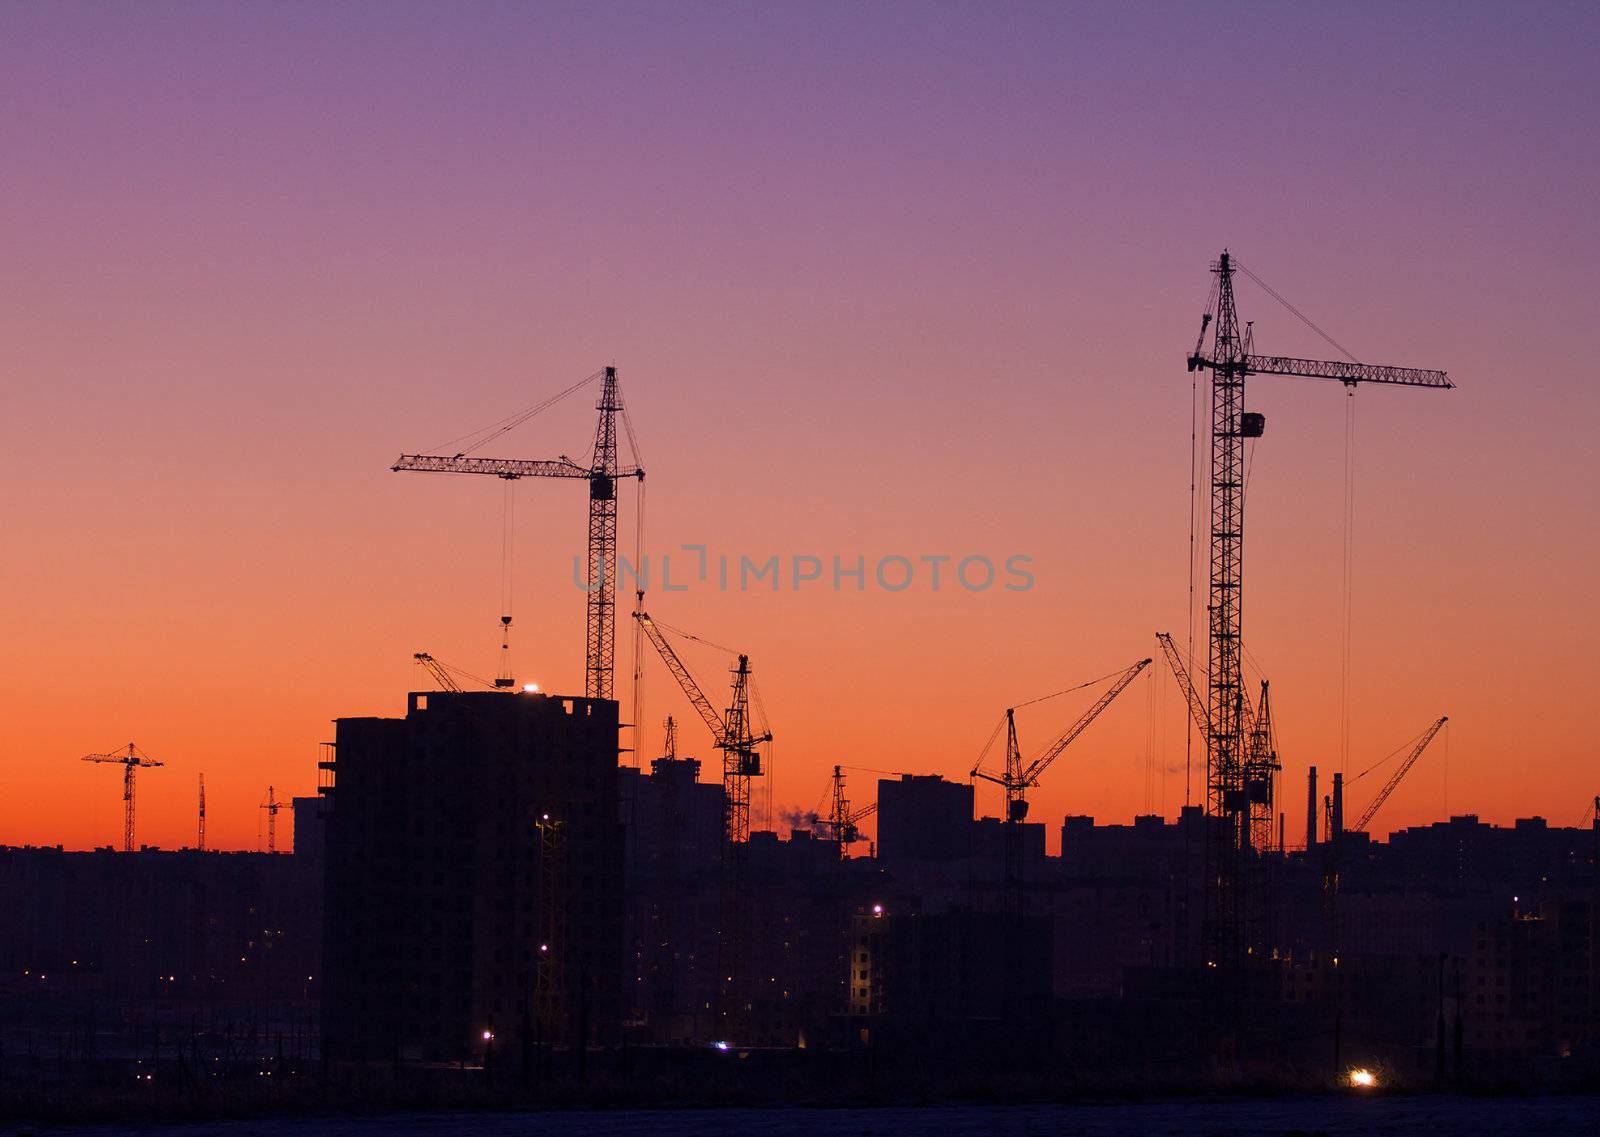 city under construction on sunrise